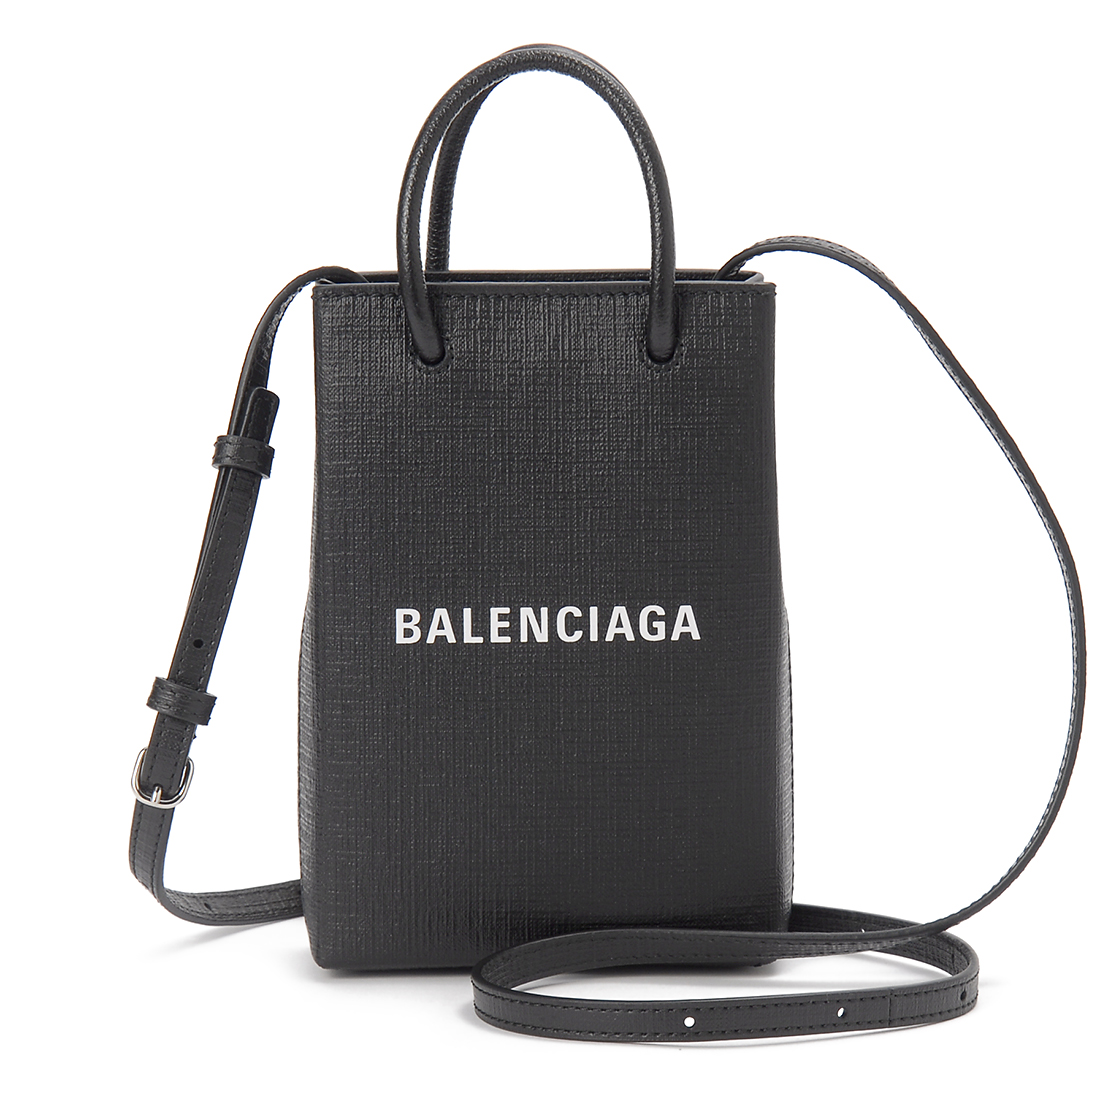 NEW BALENCIAGA BAGS SHOPPING 593826 0AI2N 1160 SHOULDER BAG/CROSSBODY BAG / HANDBAG